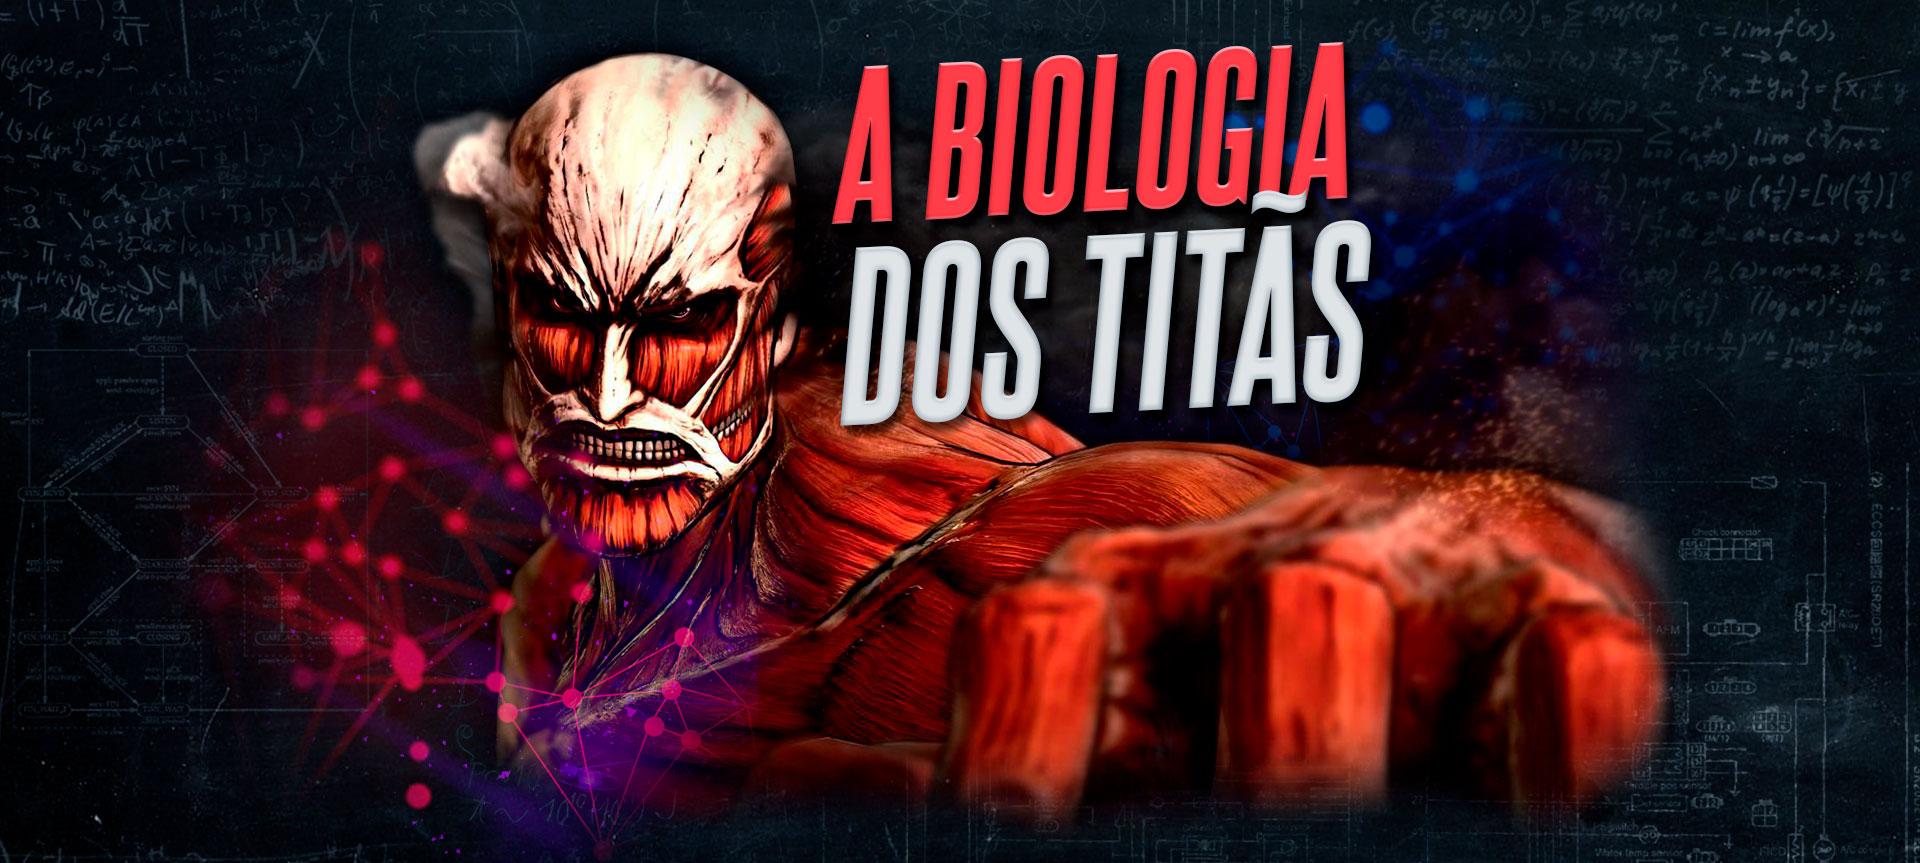 A biologia dos Titãs de Attack on Titan no mundo real